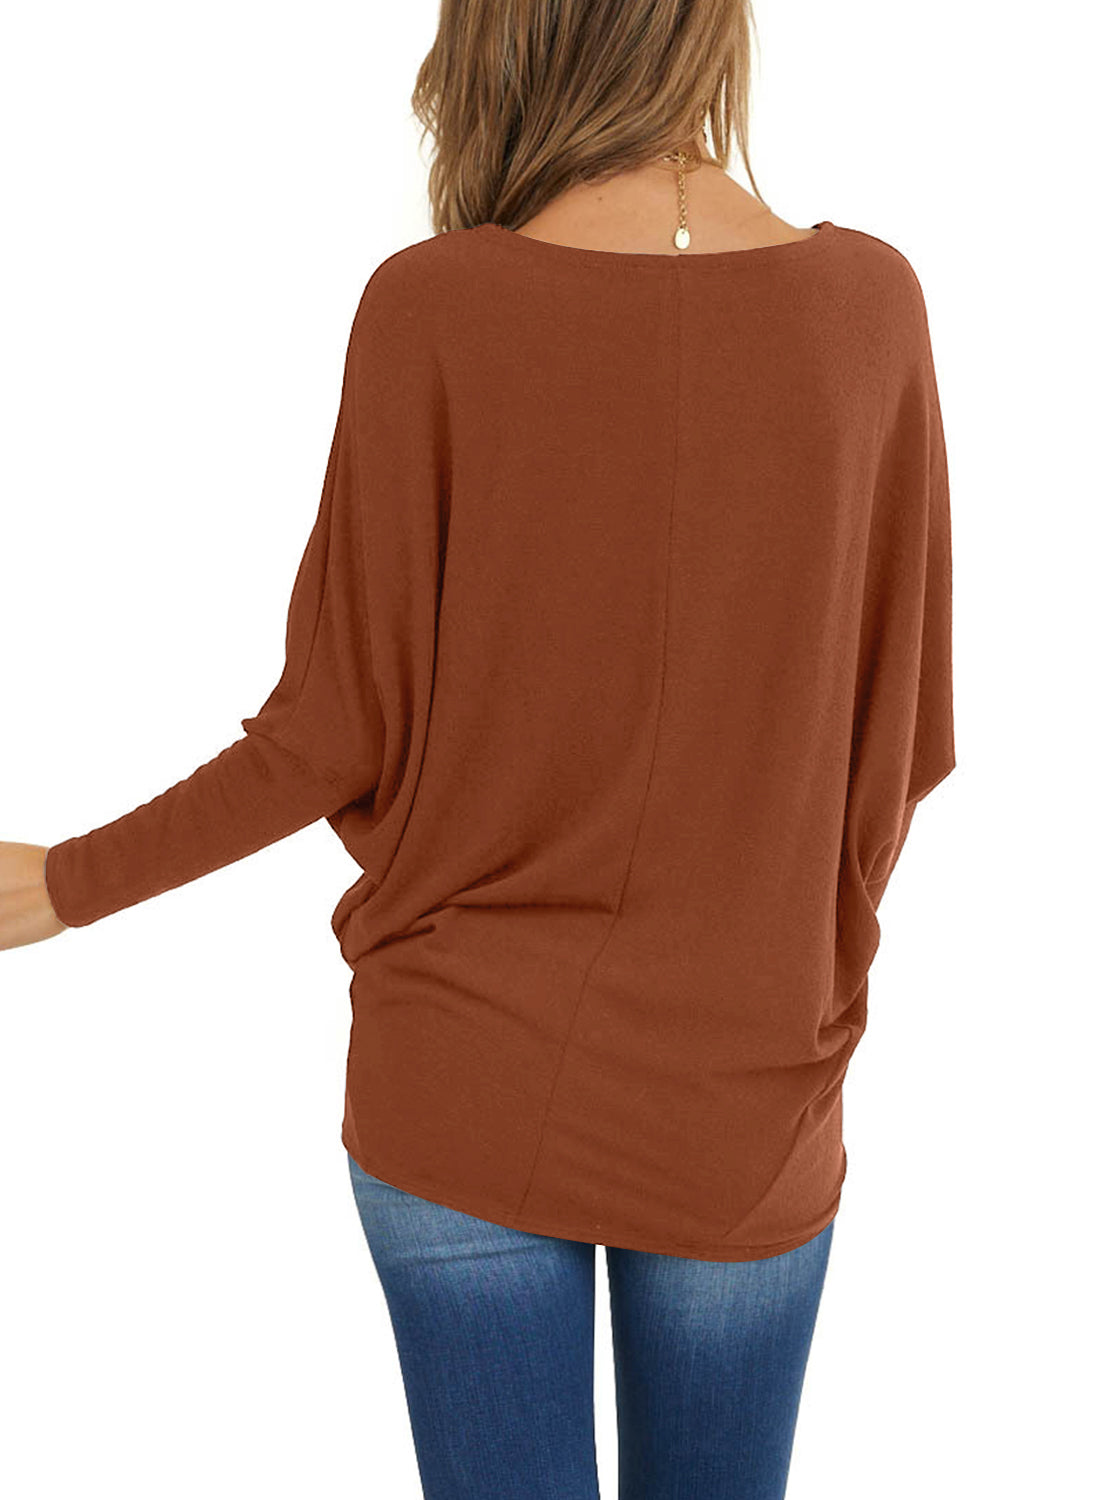 MIHOLL Womens Long Sleeve Batwing Casual Loose Dolman T-Shirt Blouse Tops